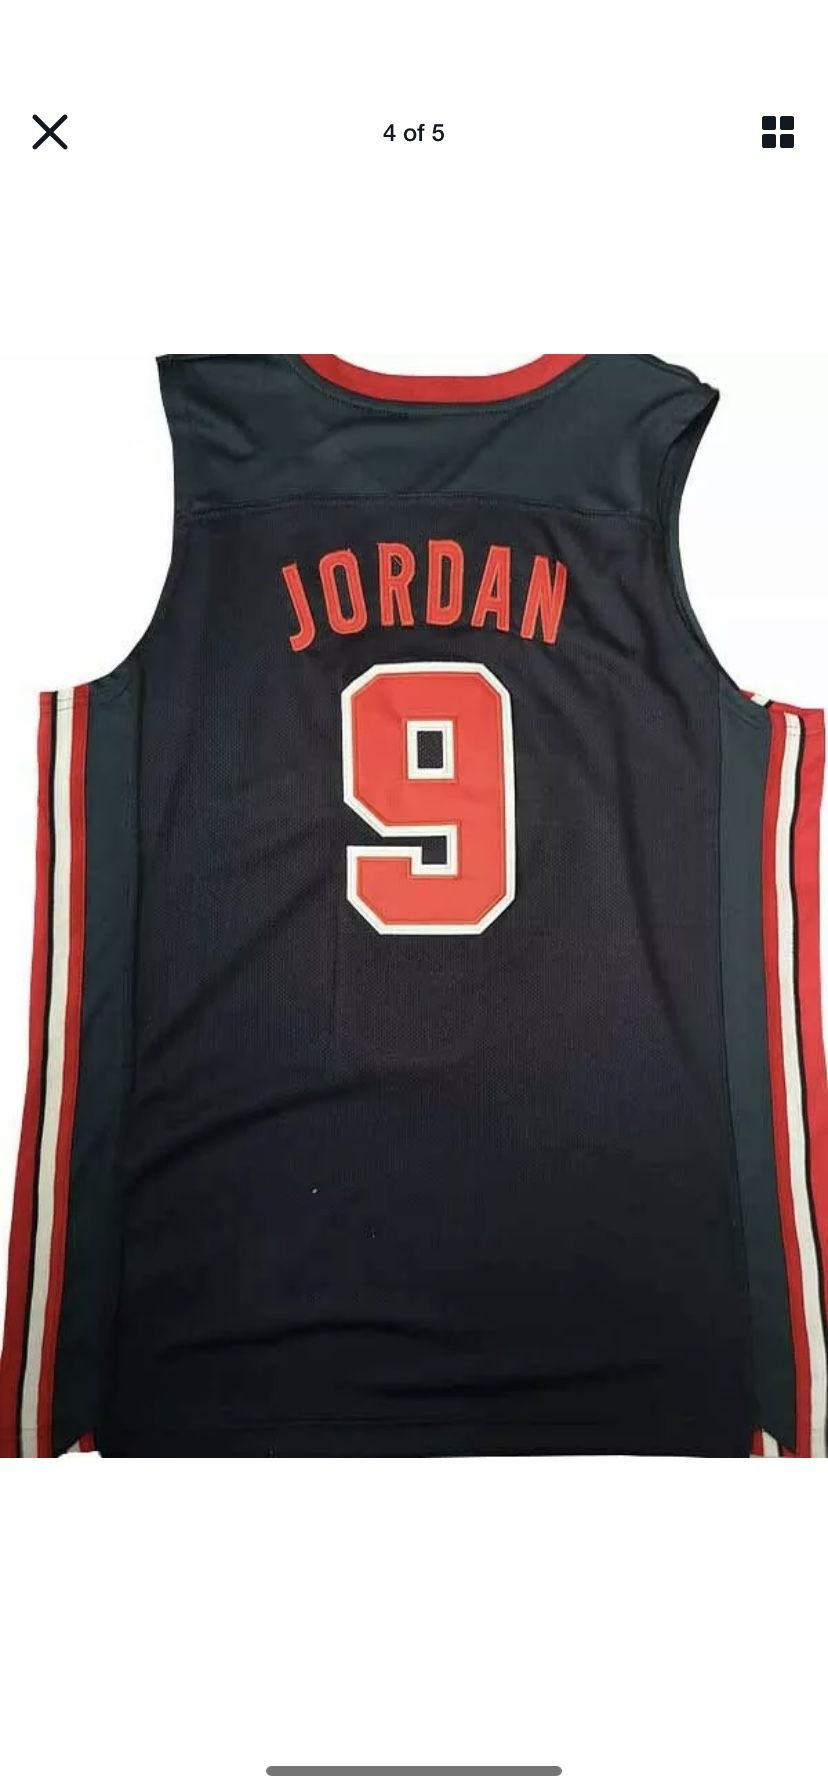 Jordan Lebron Jerseys New ready to rock for playoffs